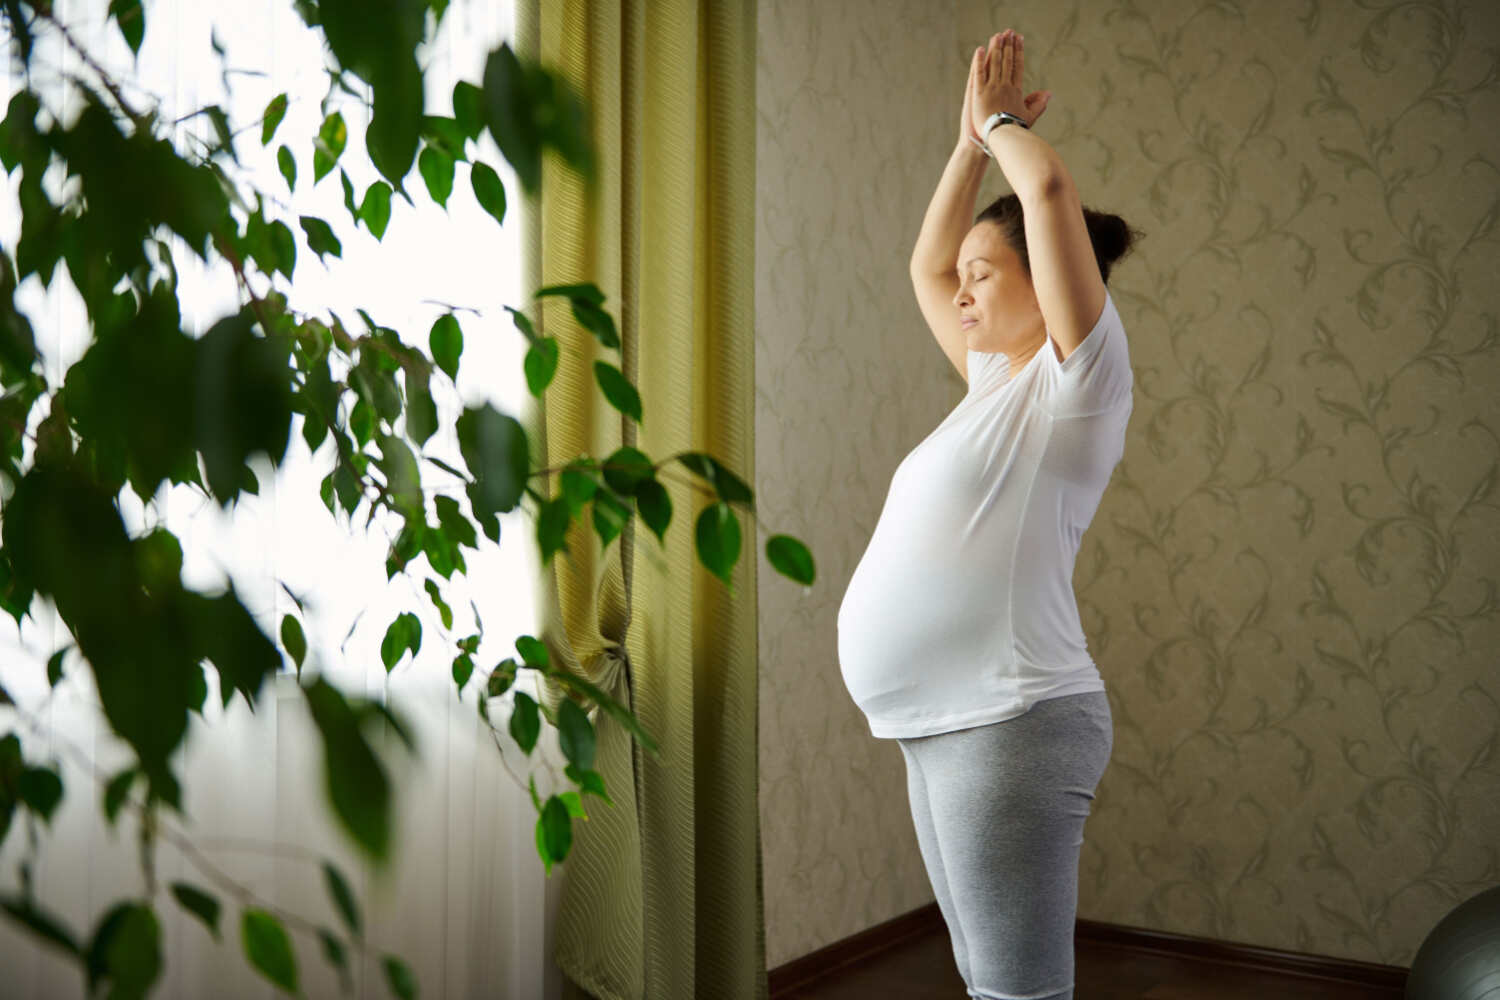 List of Top Ten Benefits of Surya Namaskar During Pregnancy